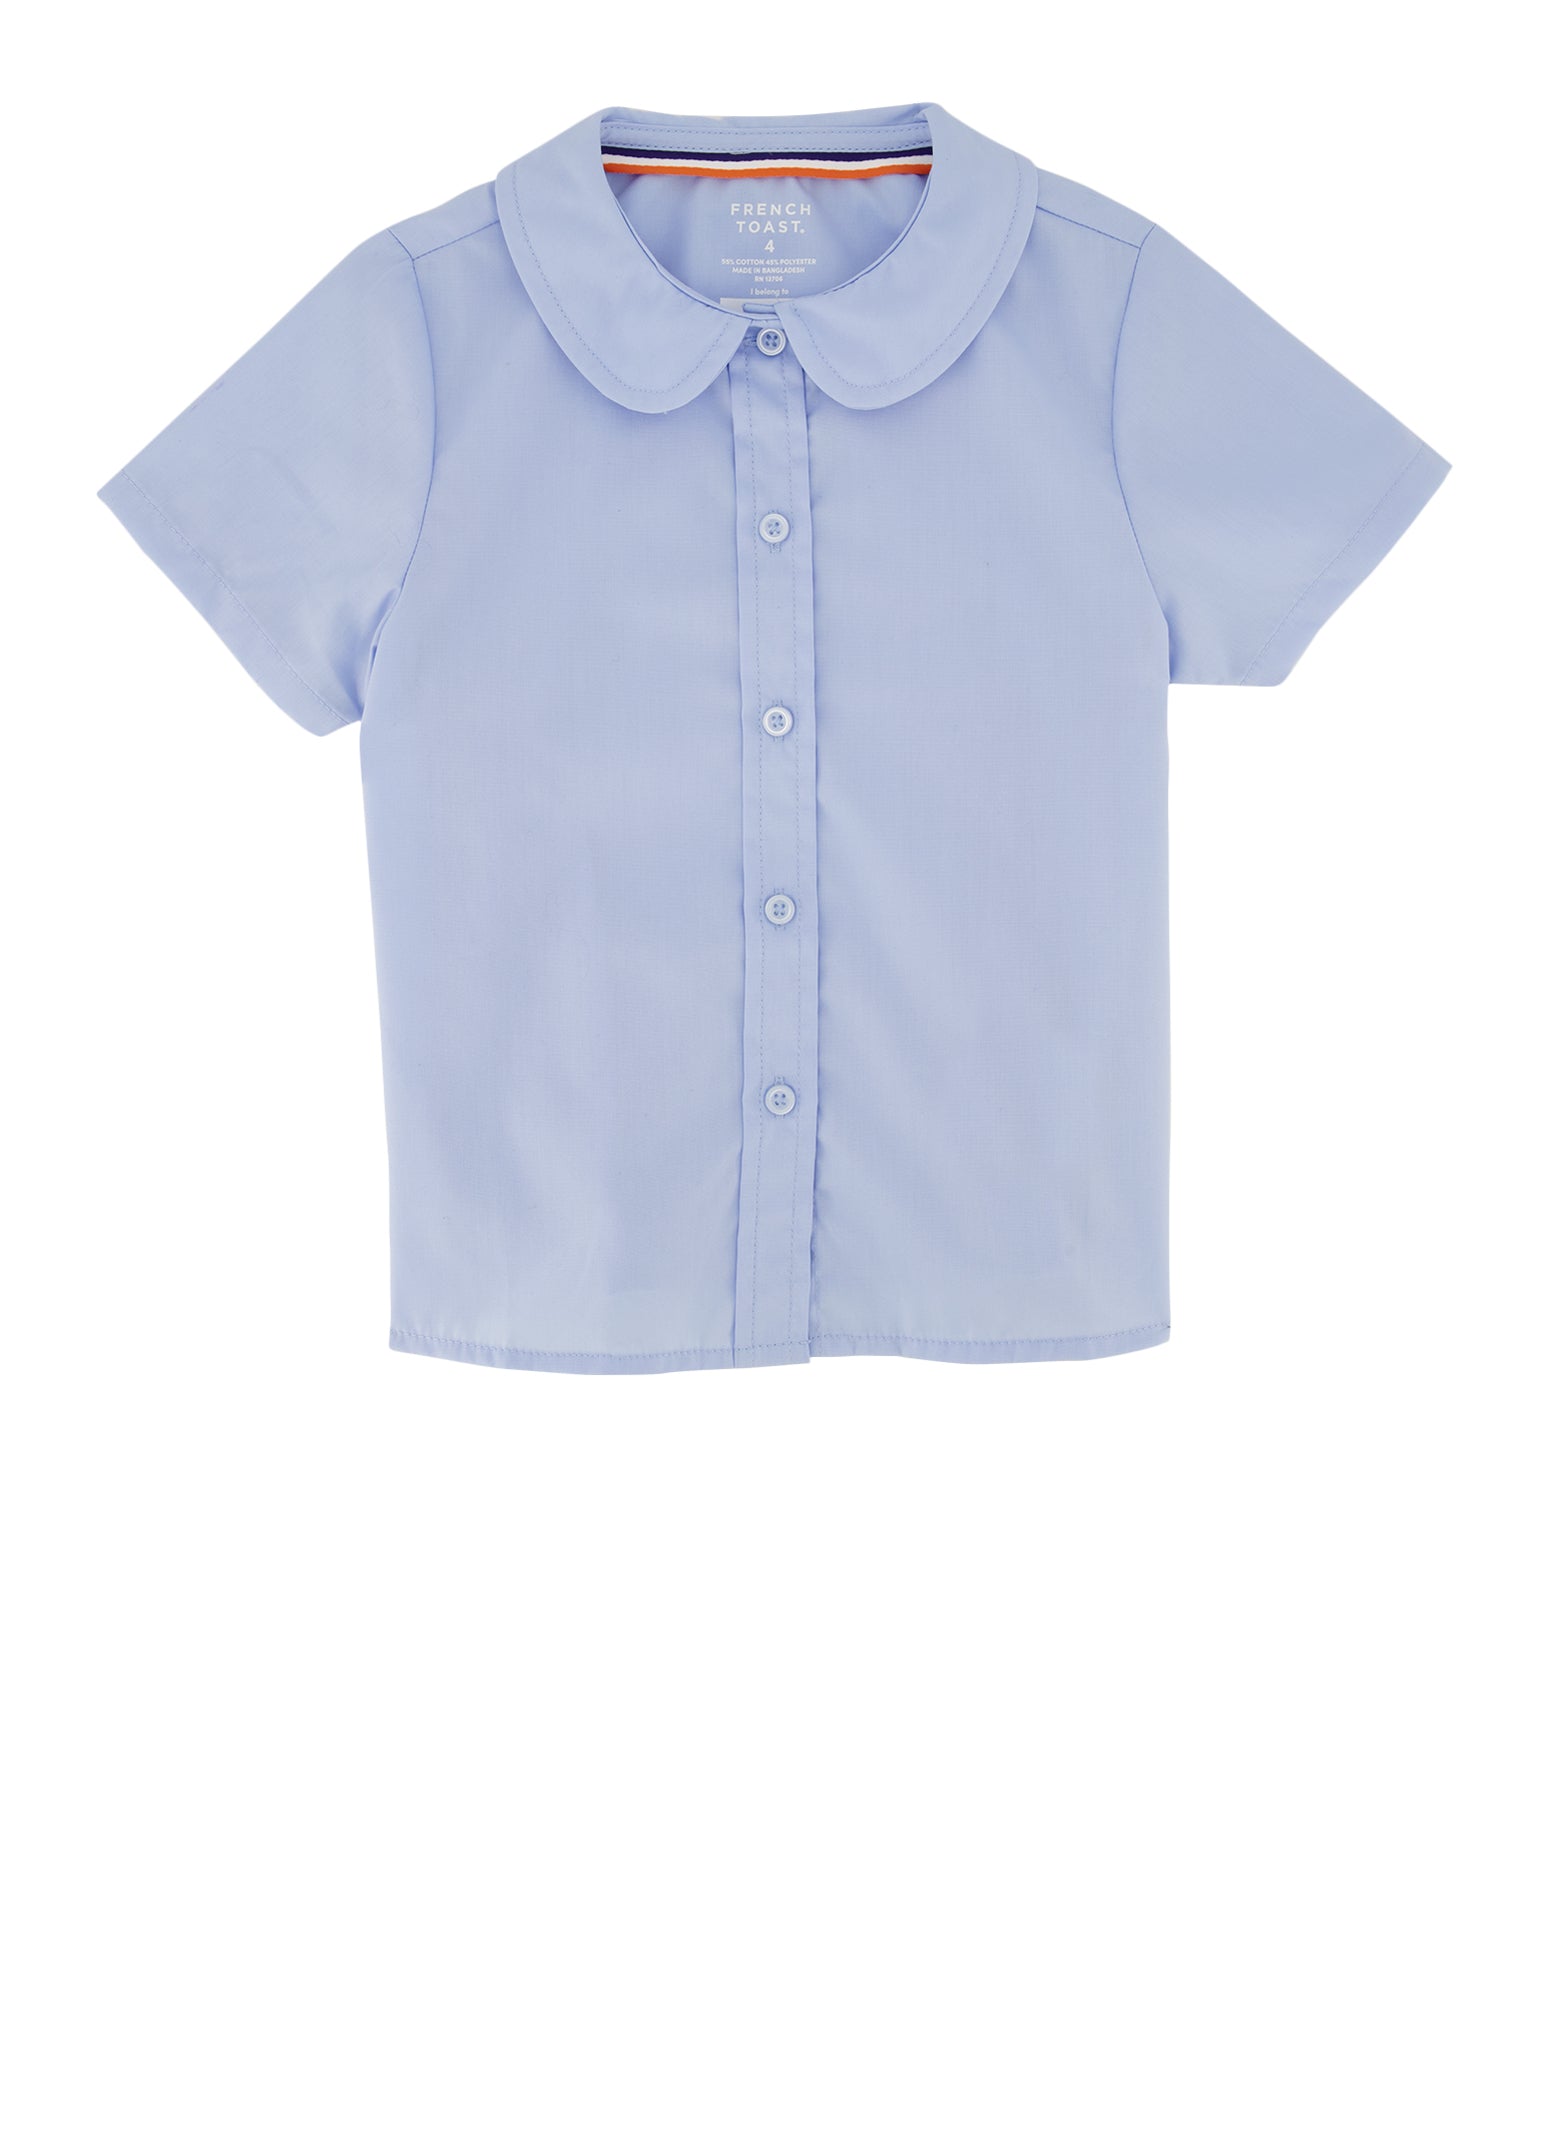 French Toast Girls 4-6x Peter Pan Collar Shirt, Blue, Size 6X